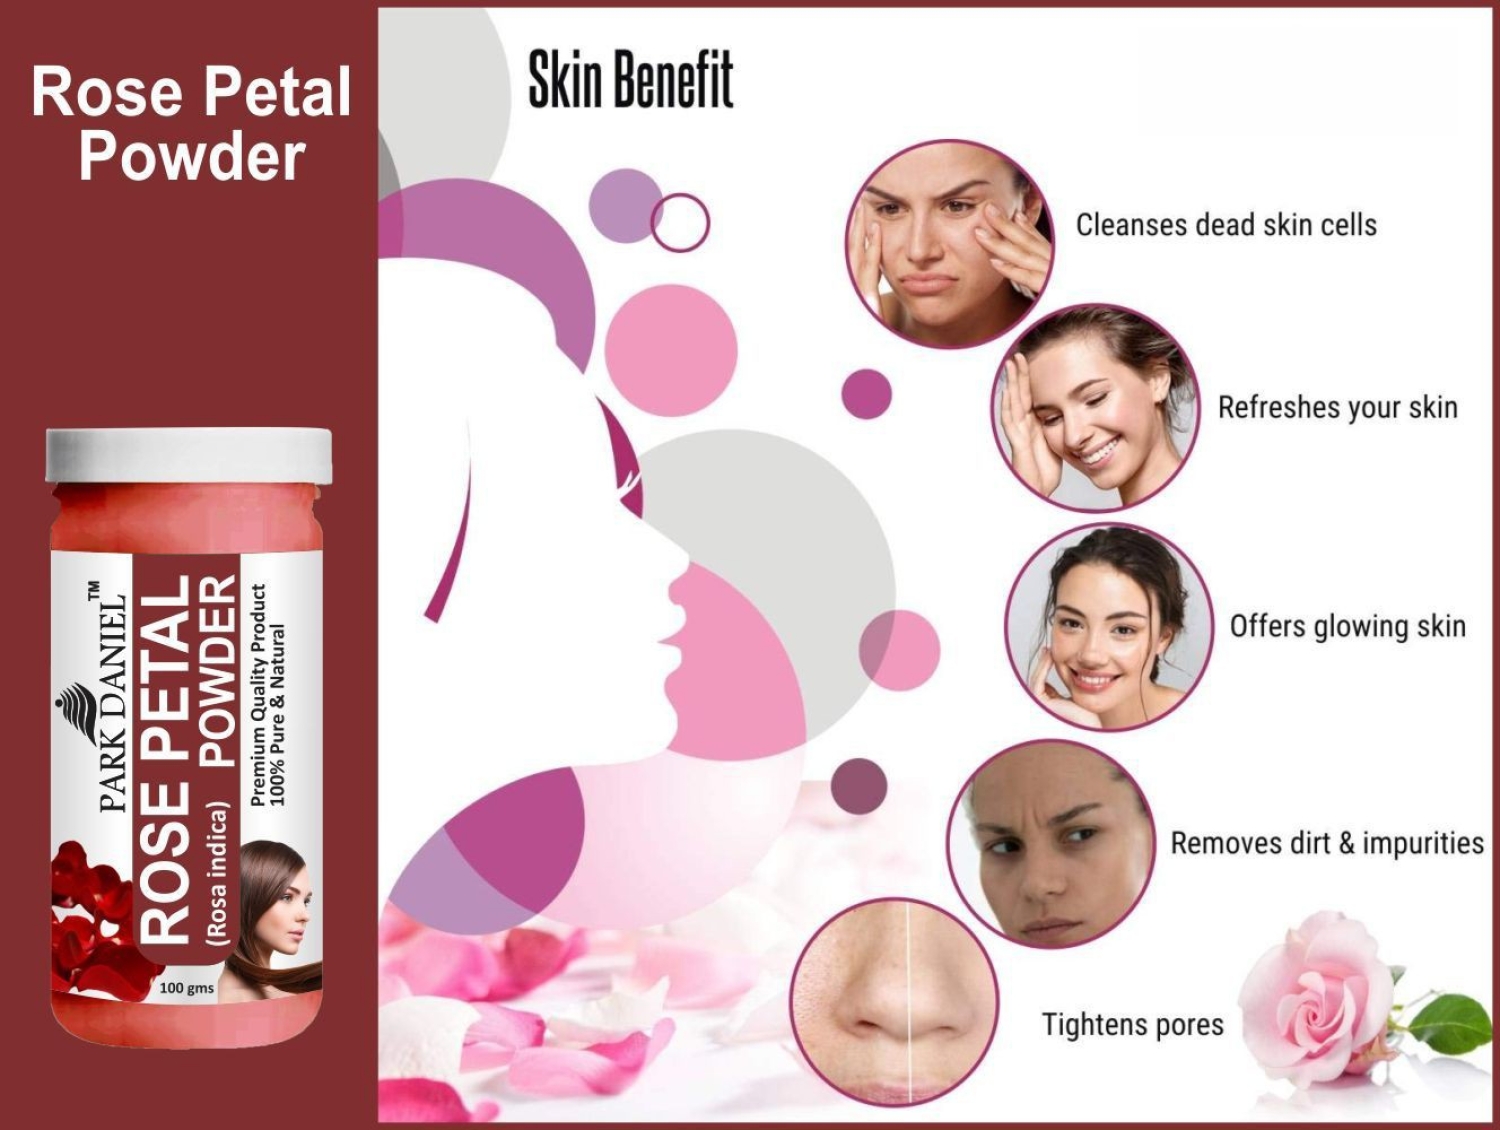 Rose Petal Powder Benefits: Top Benefits of Rose Petal Powder